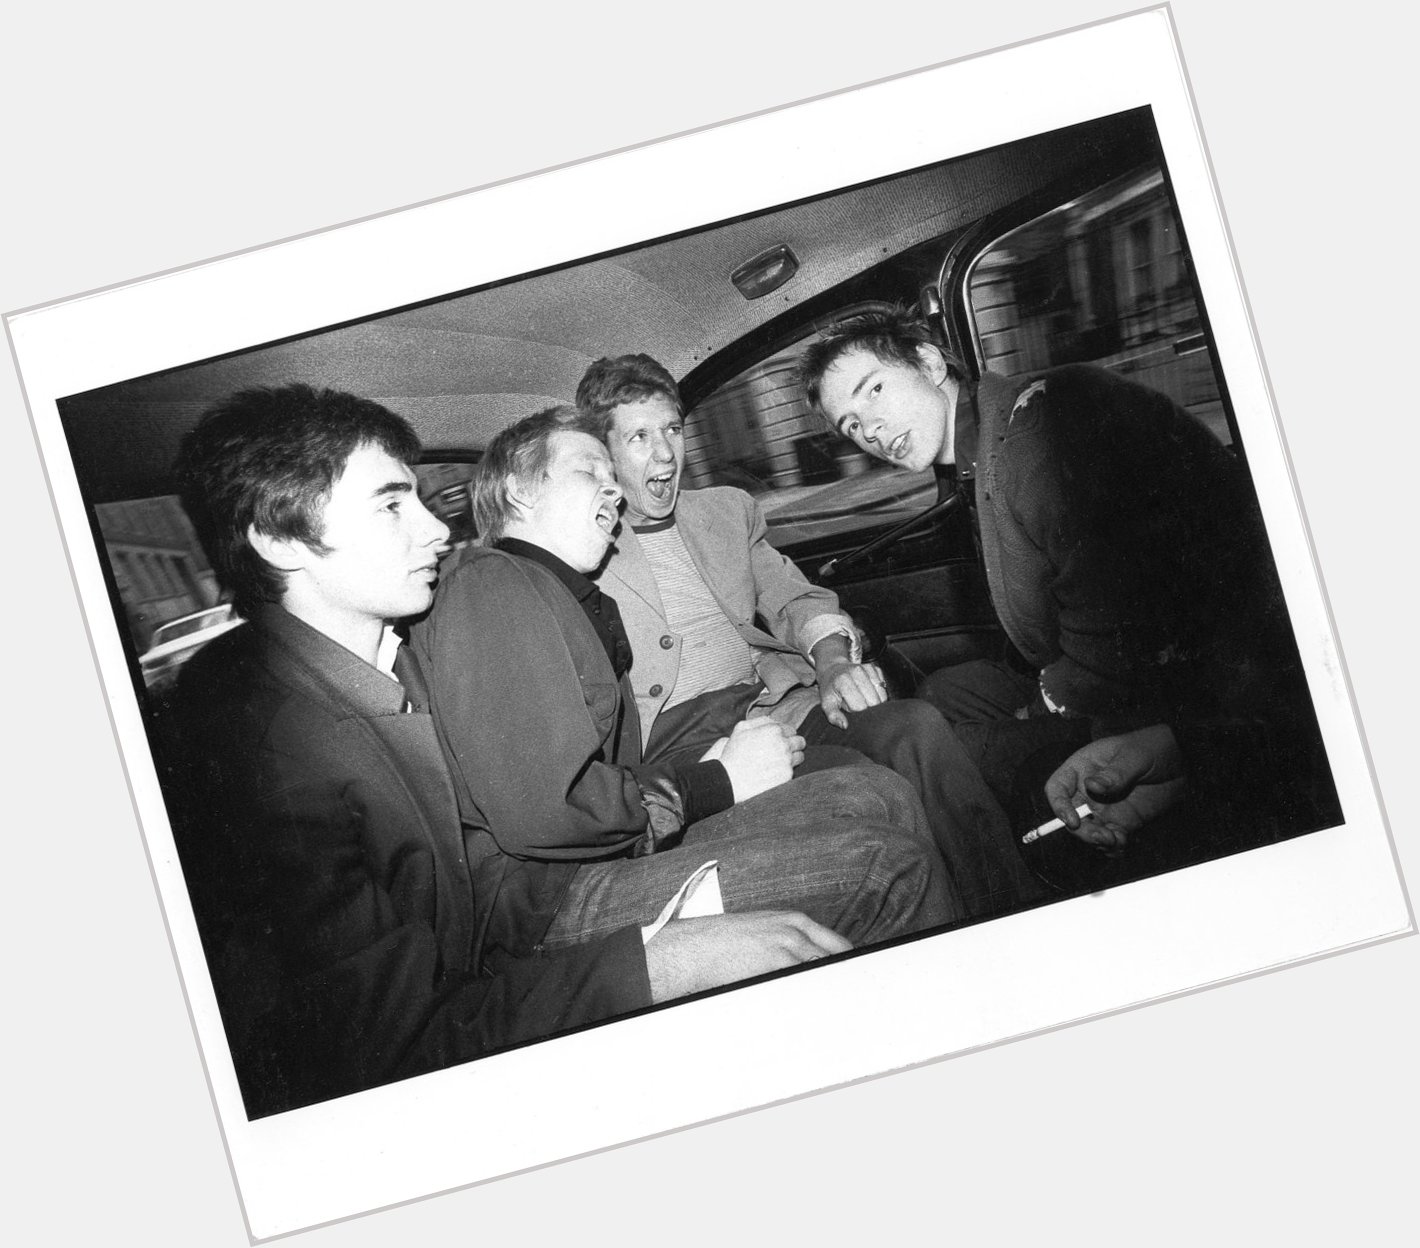 Happy birthday to Glen Matlock - pic by Stevenson, Sex Pistols in taxi, April 1976 